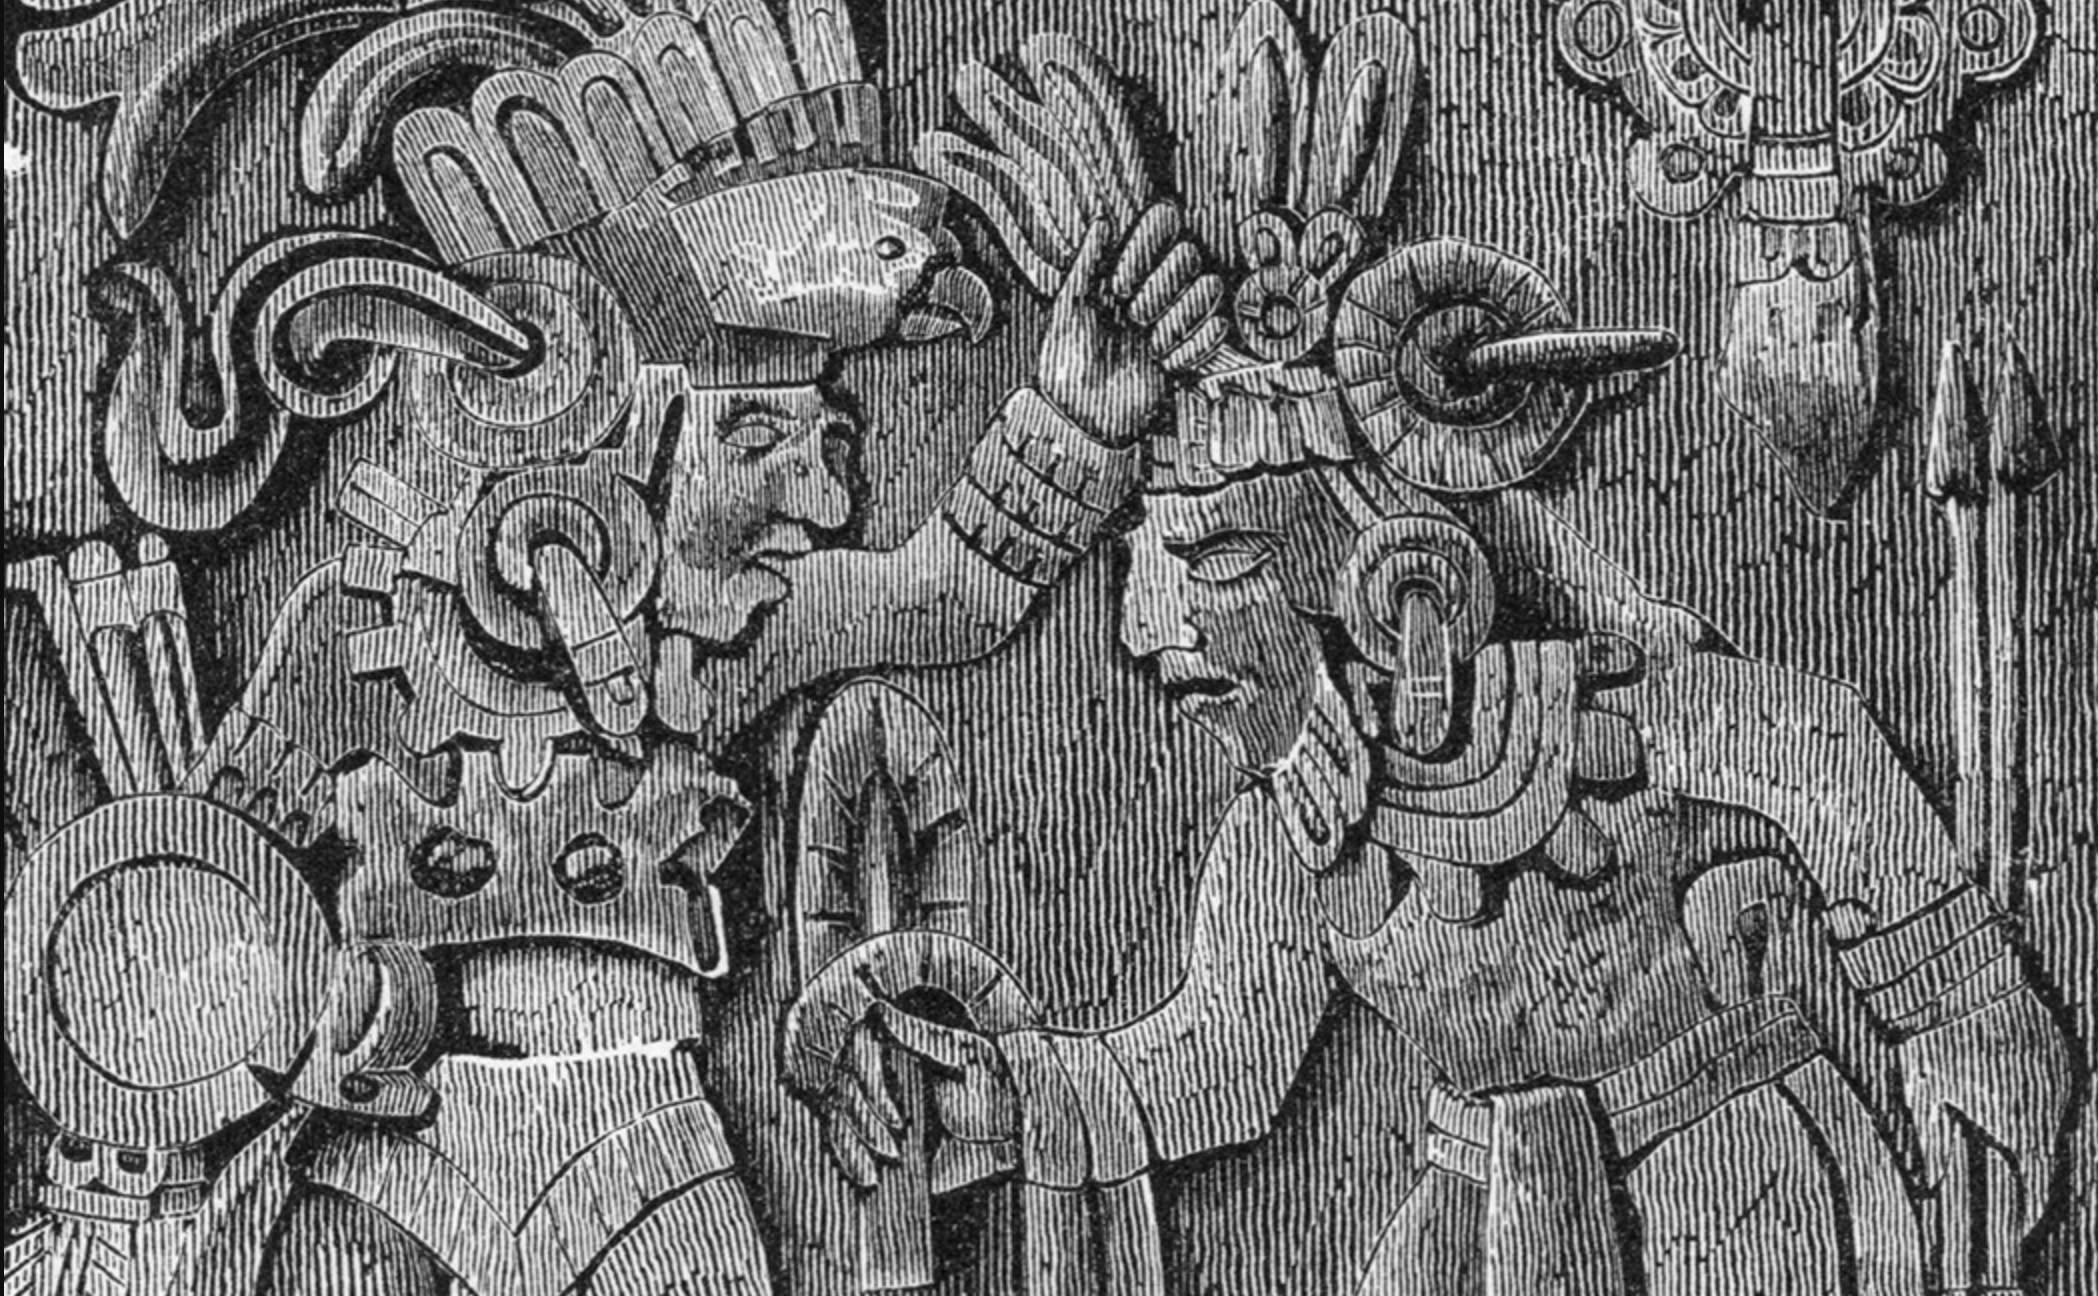 Mayan Bloodletting Rituals